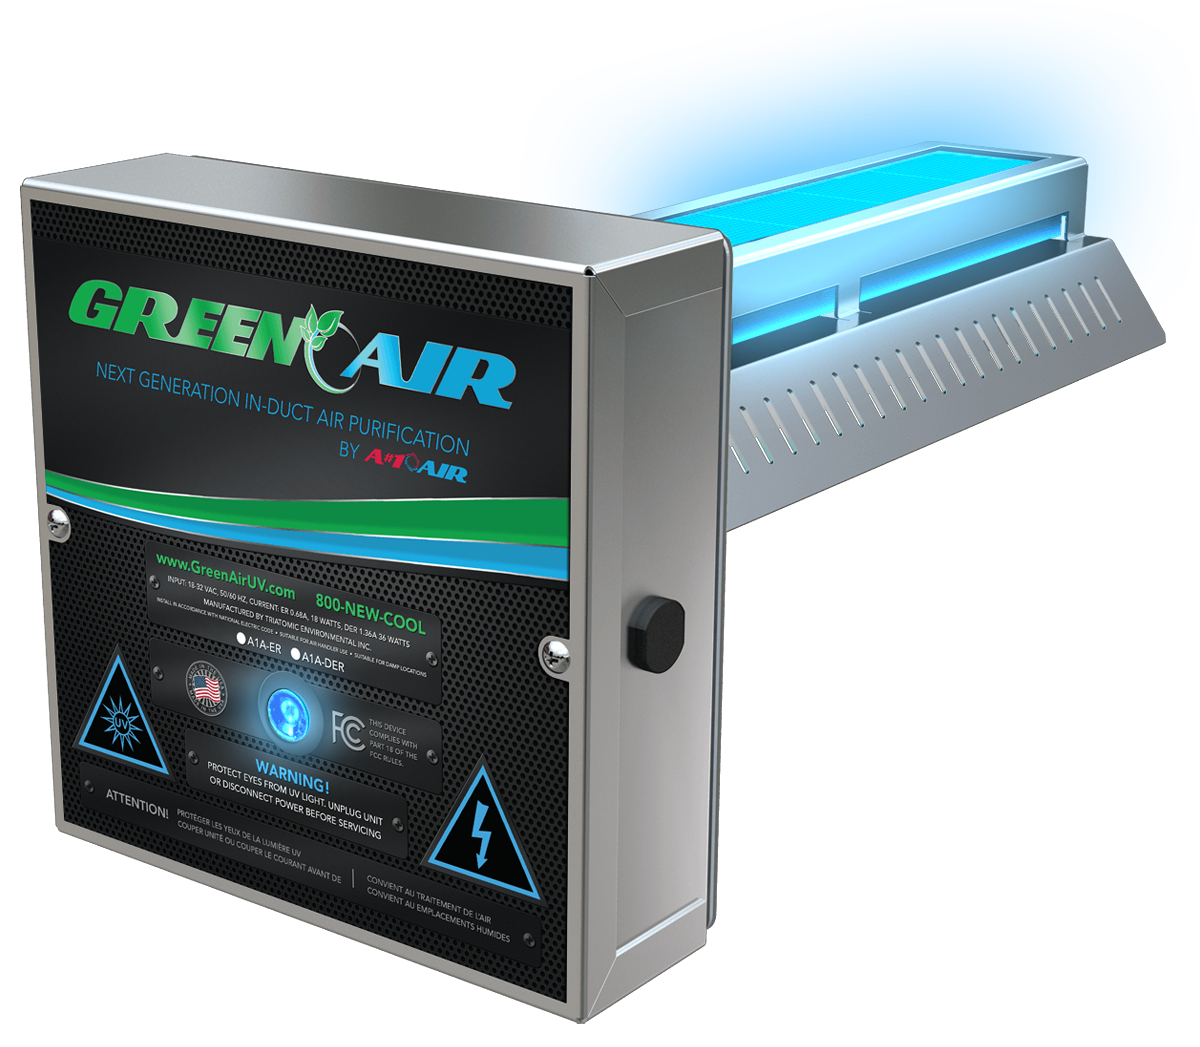 GreenAir UV – Next Generation In-Duct Air Purification